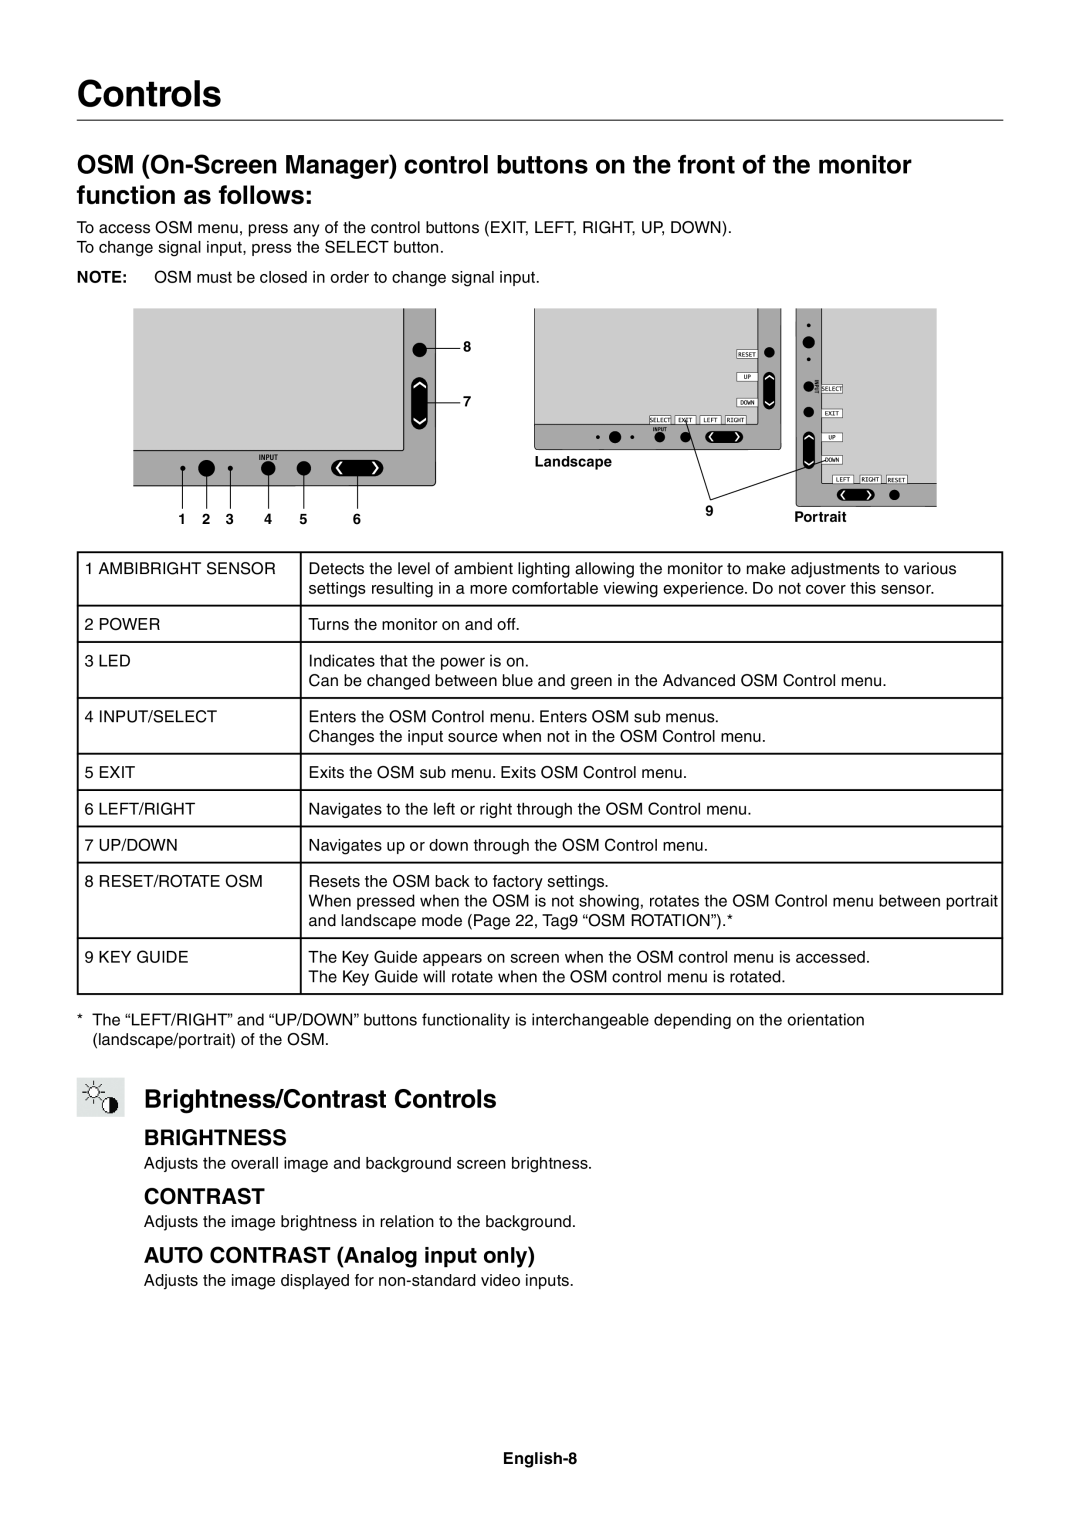 NEC LCD2090UXI user manual Brightness/Contrast Controls 